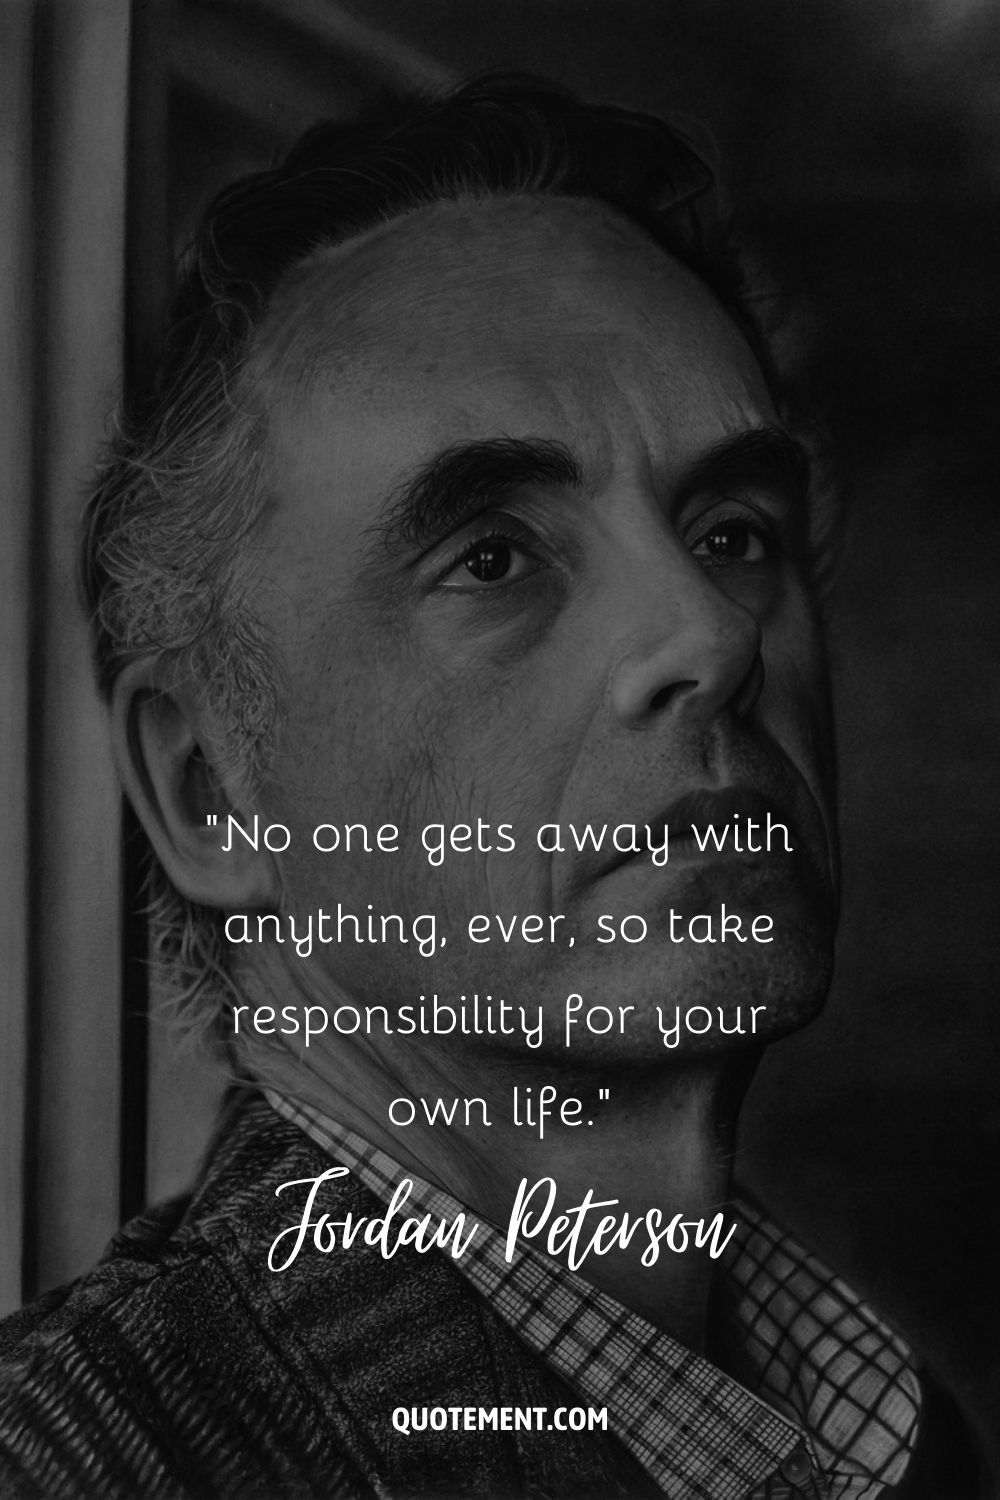 Jordan Peterson quote about responsibility.